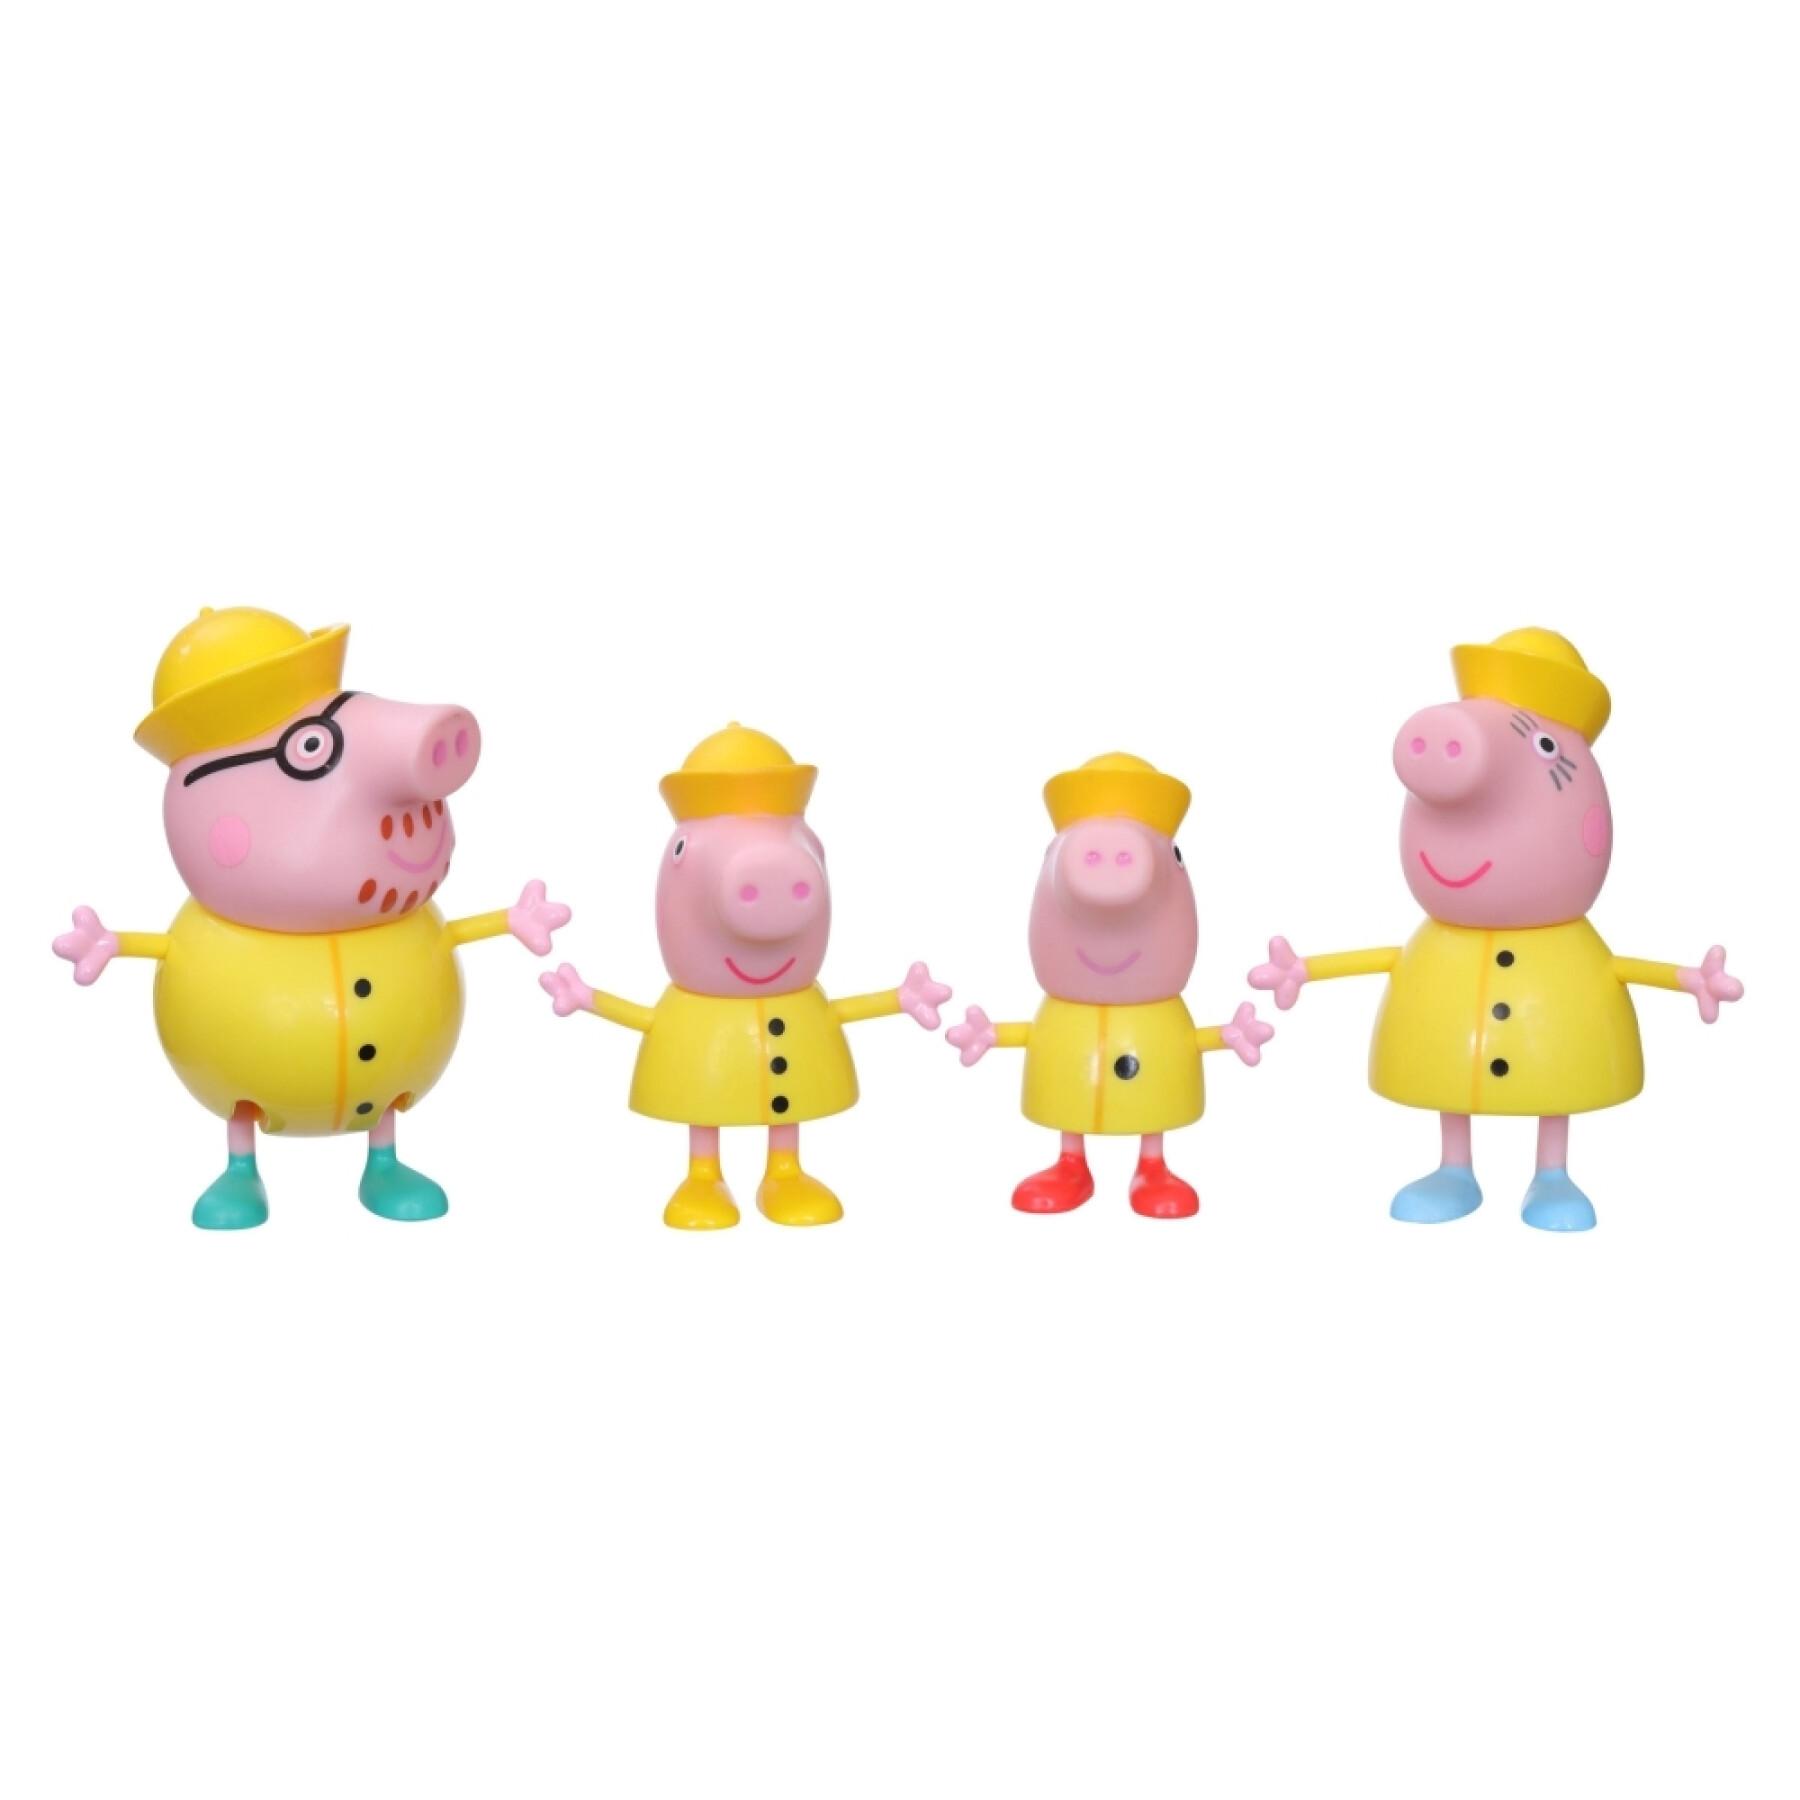 Lot de 4 figurines peppa et sa famille Peppa Pig